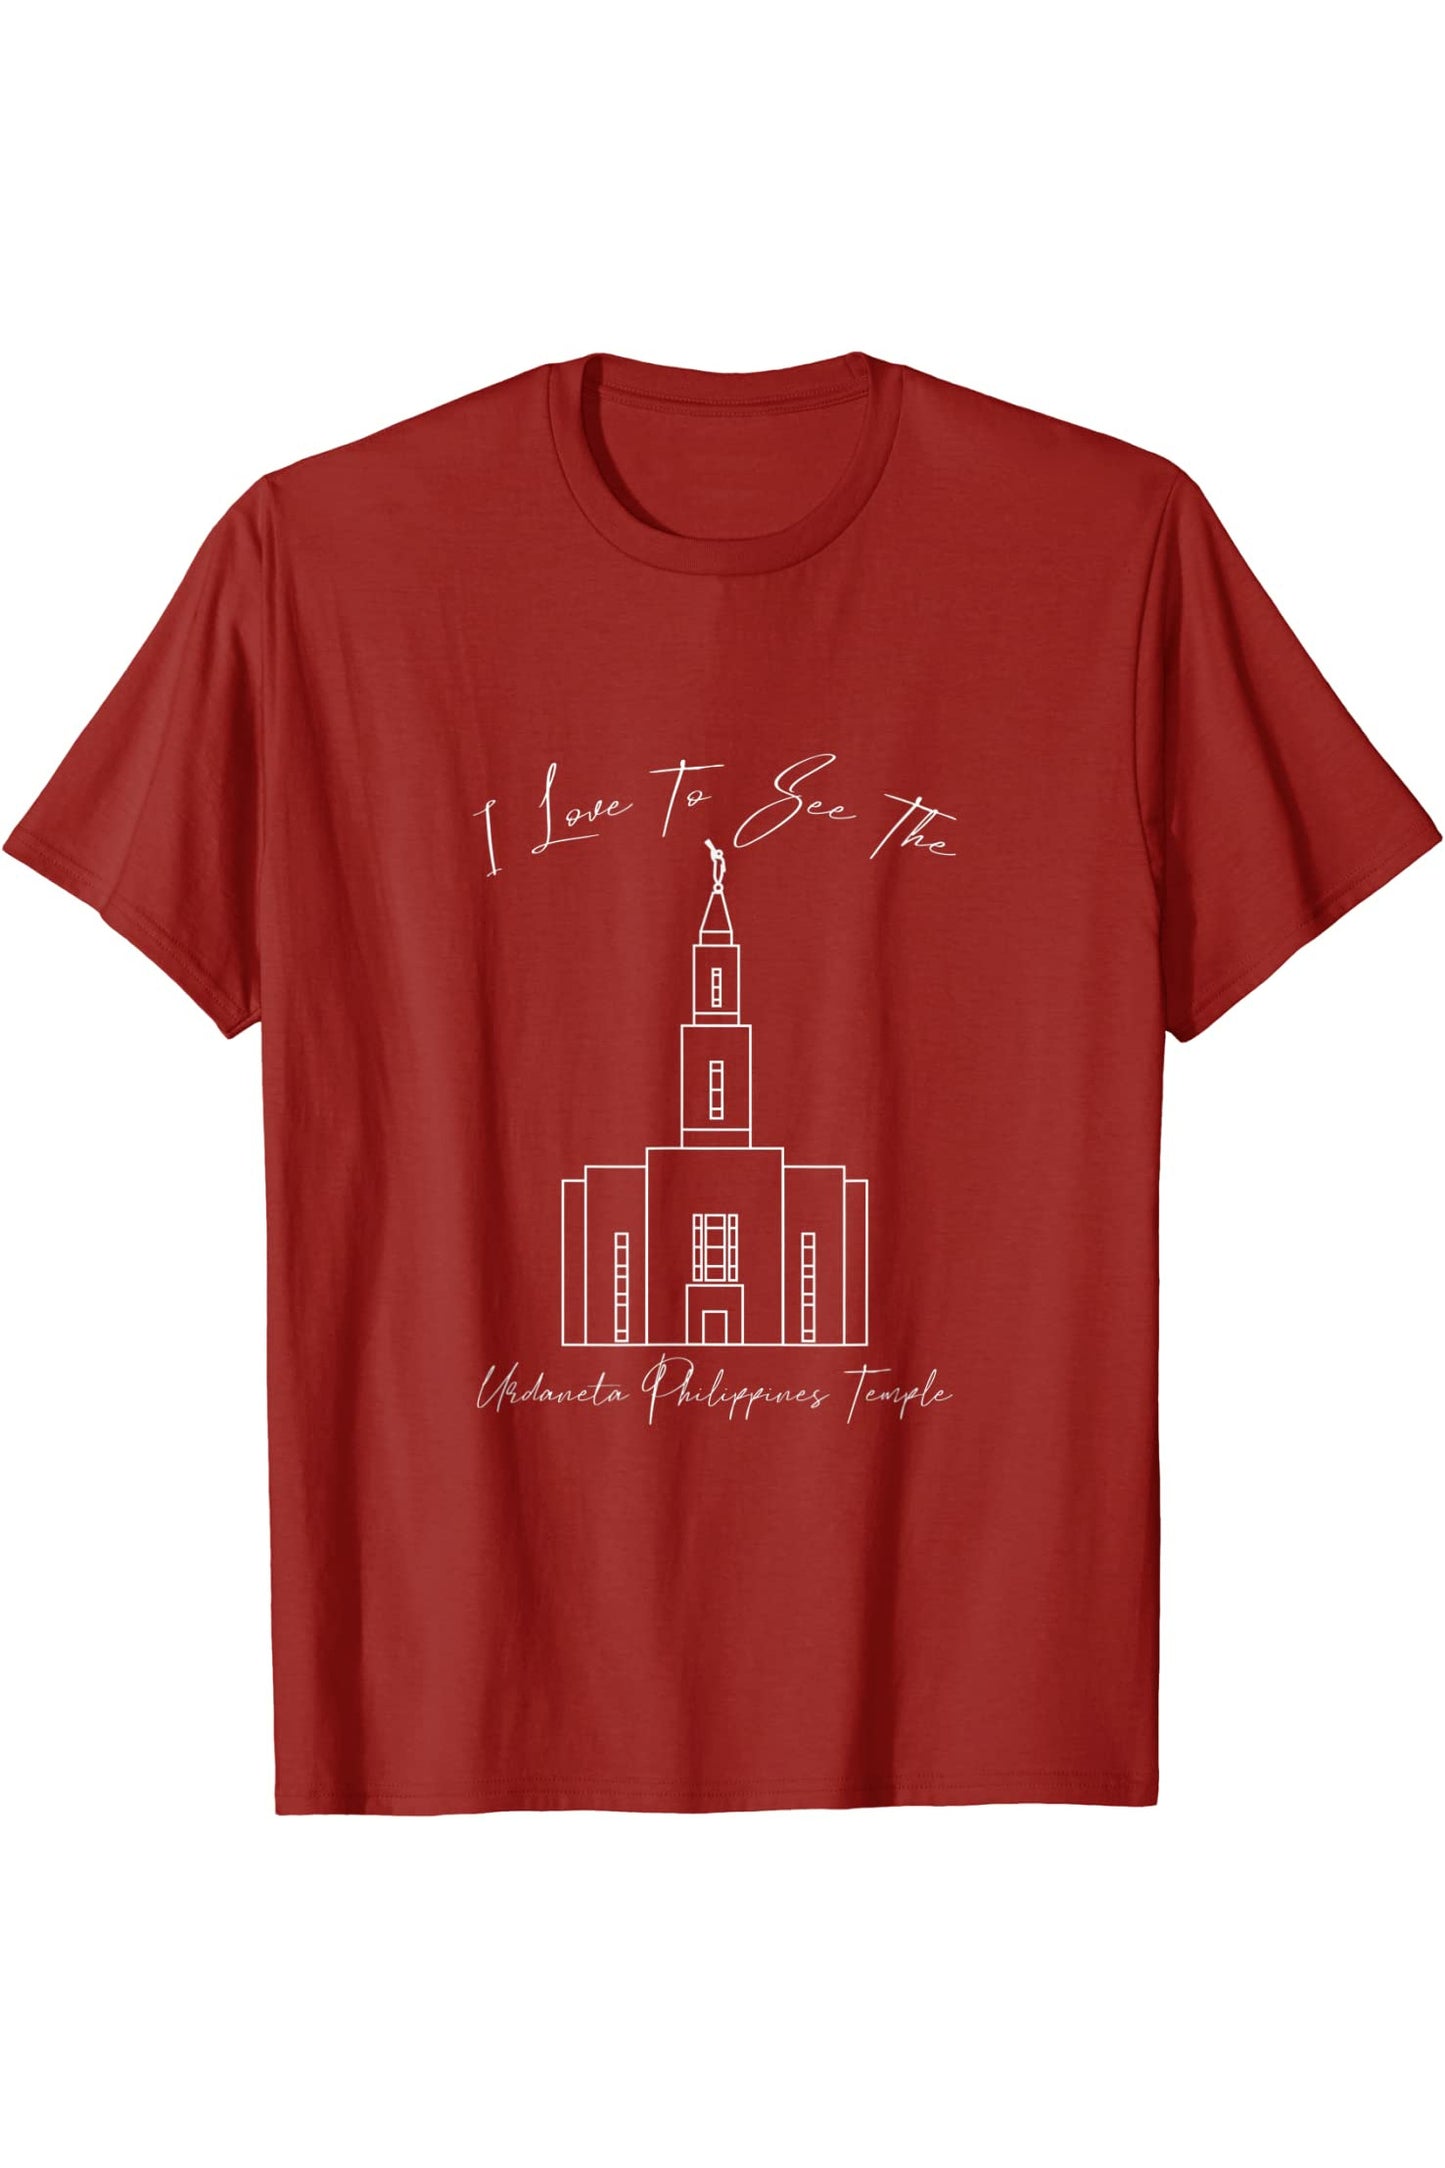 Urdaneta Philippines Temple T-Shirt - Happy Style (English) US